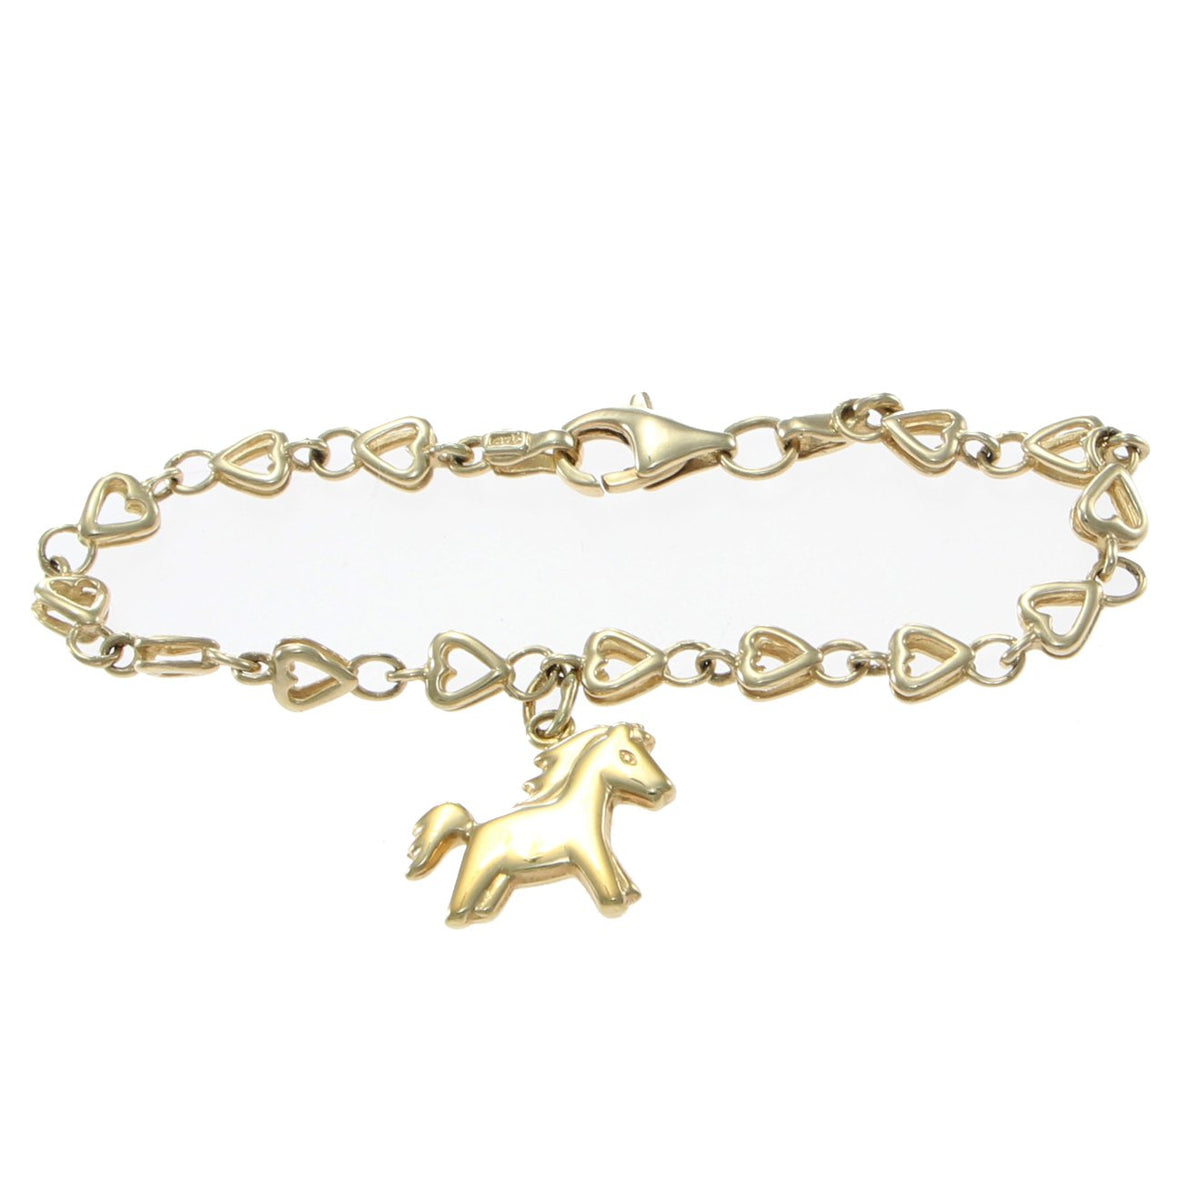 Pony Charm Baby Love Heart Bracelet 14k Yellow Gold Chain Link 5mm 5.5inch  5.1g